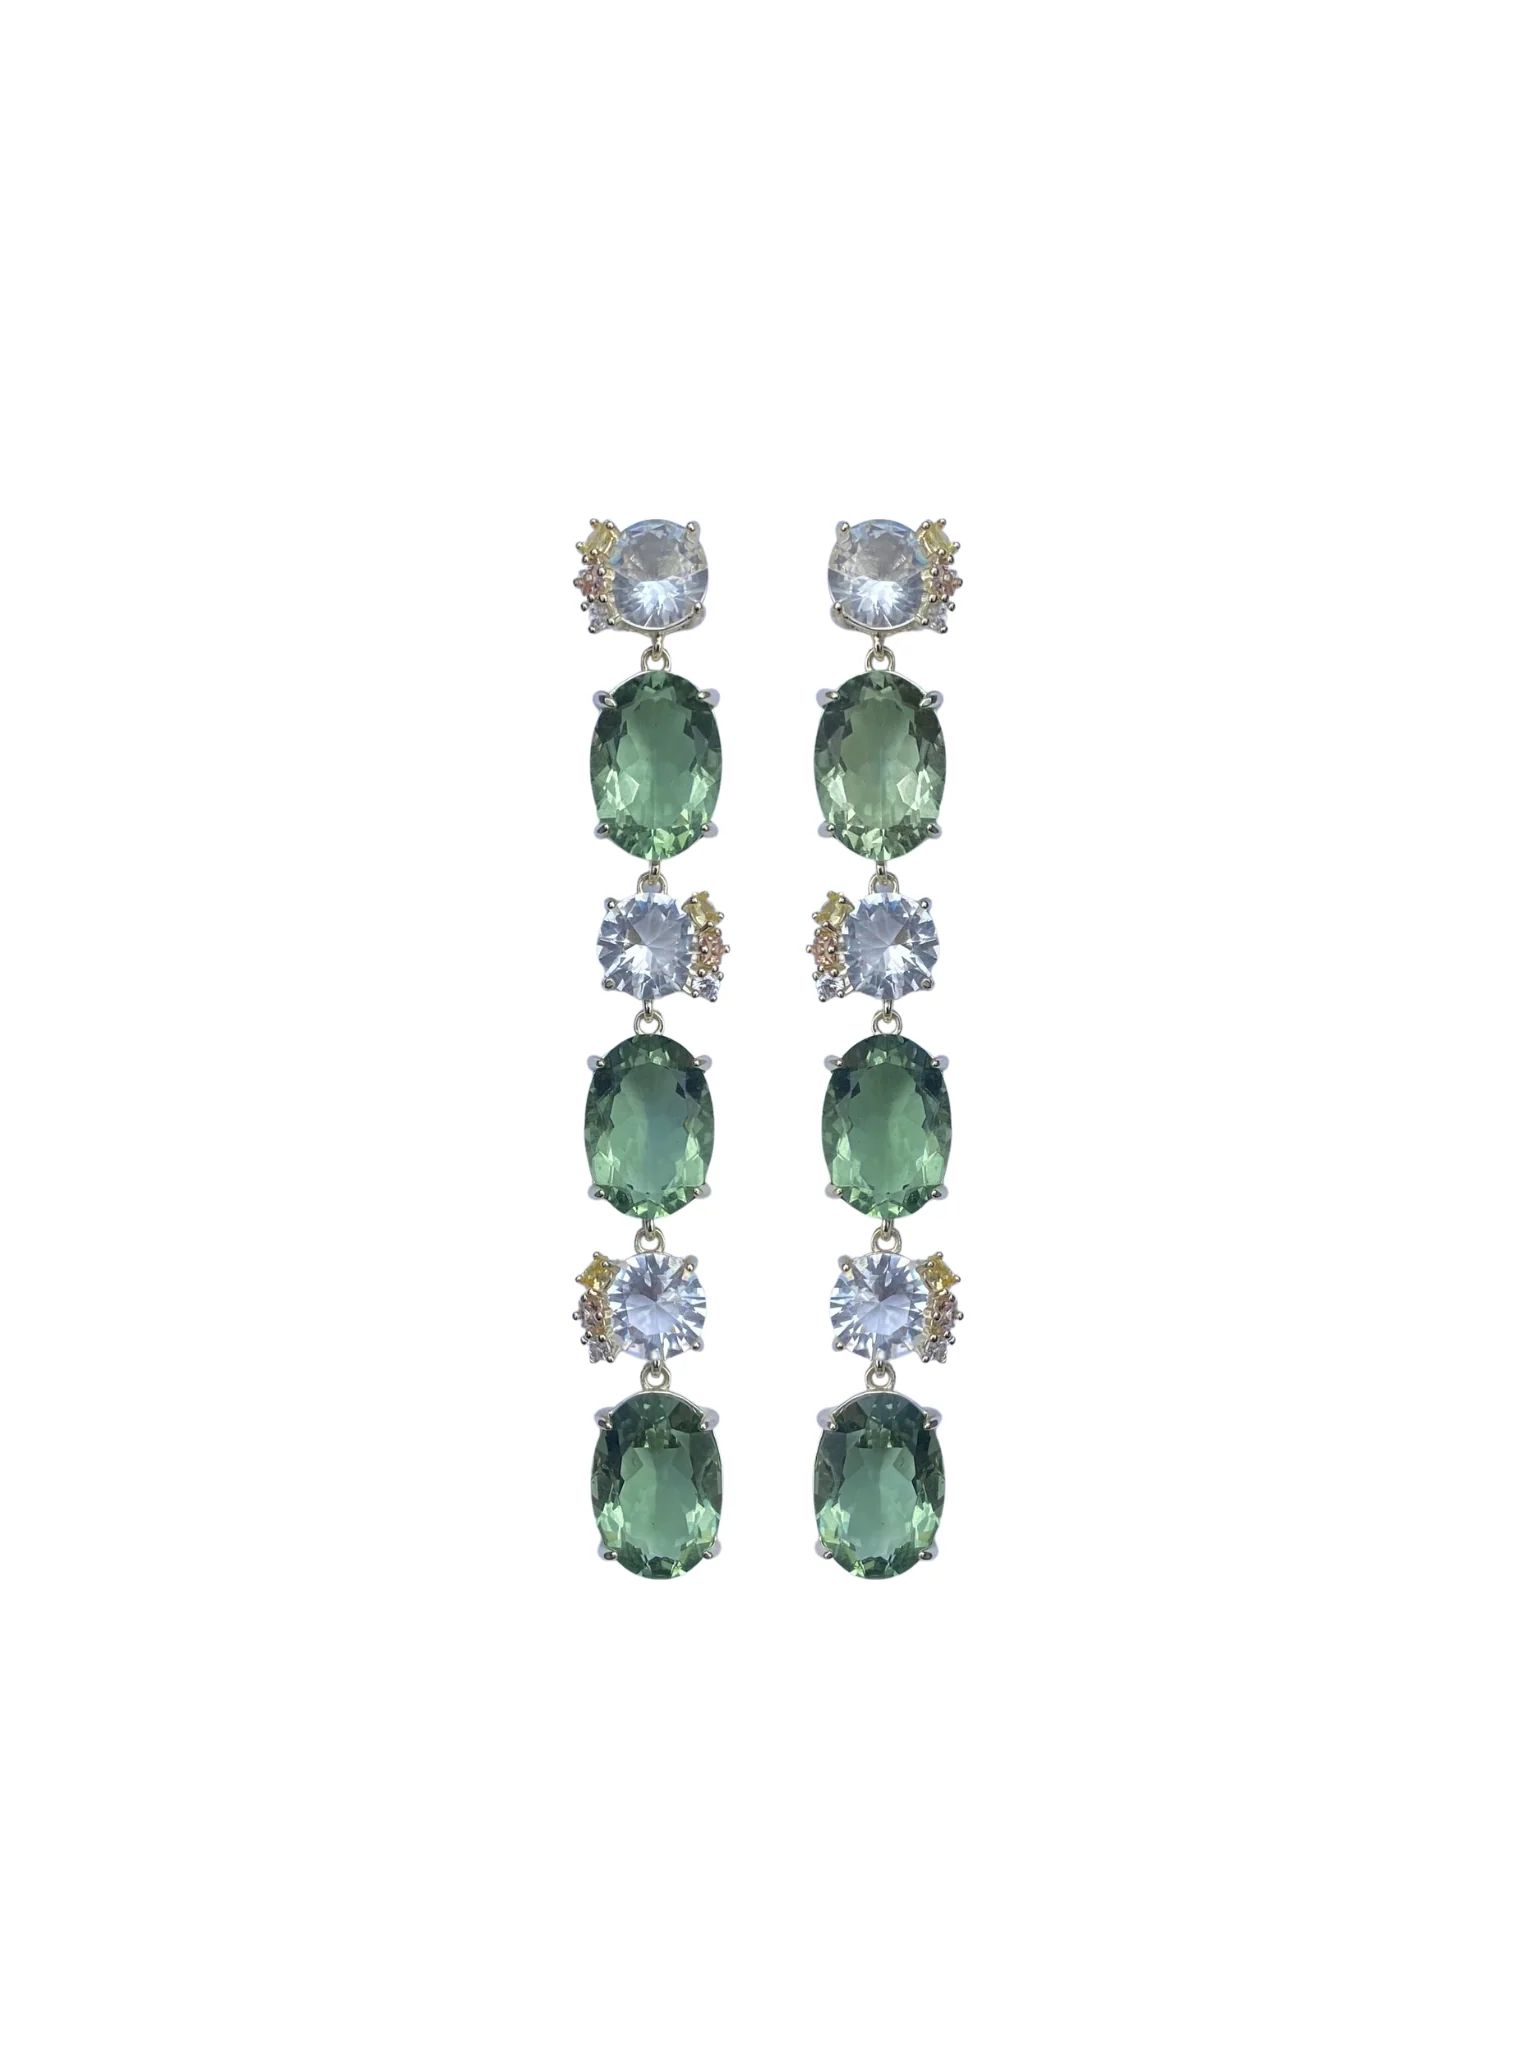 Sage Green Linear Drop | Nicola Bathie Jewelry